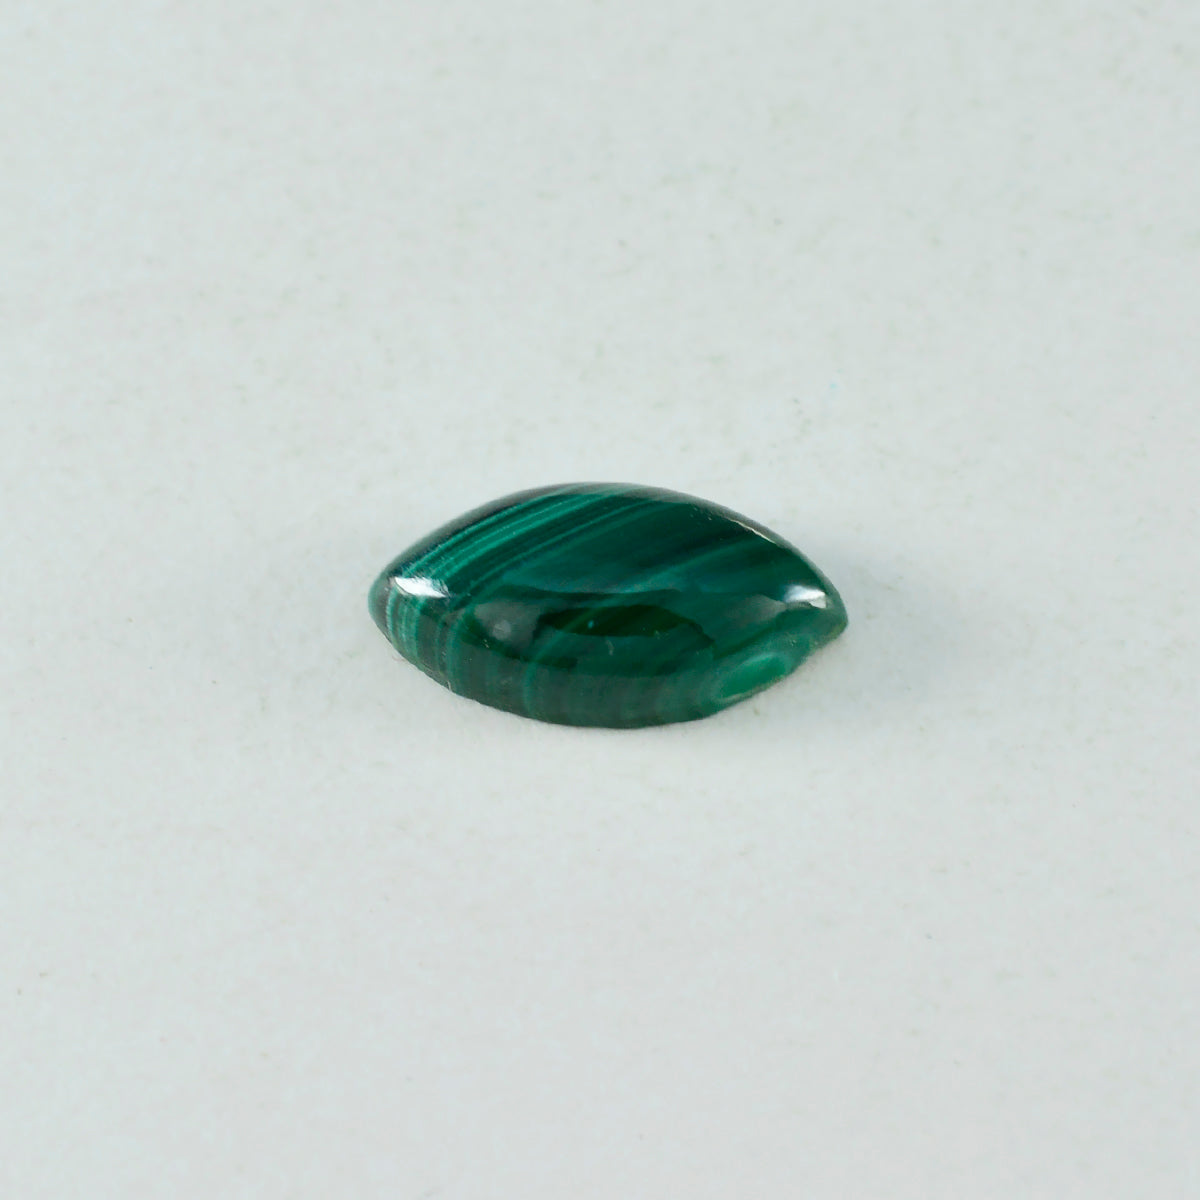 riyogems 1 st grön malakit cabochon 11x22 mm marquise form häpnadsväckande kvalitet lös sten